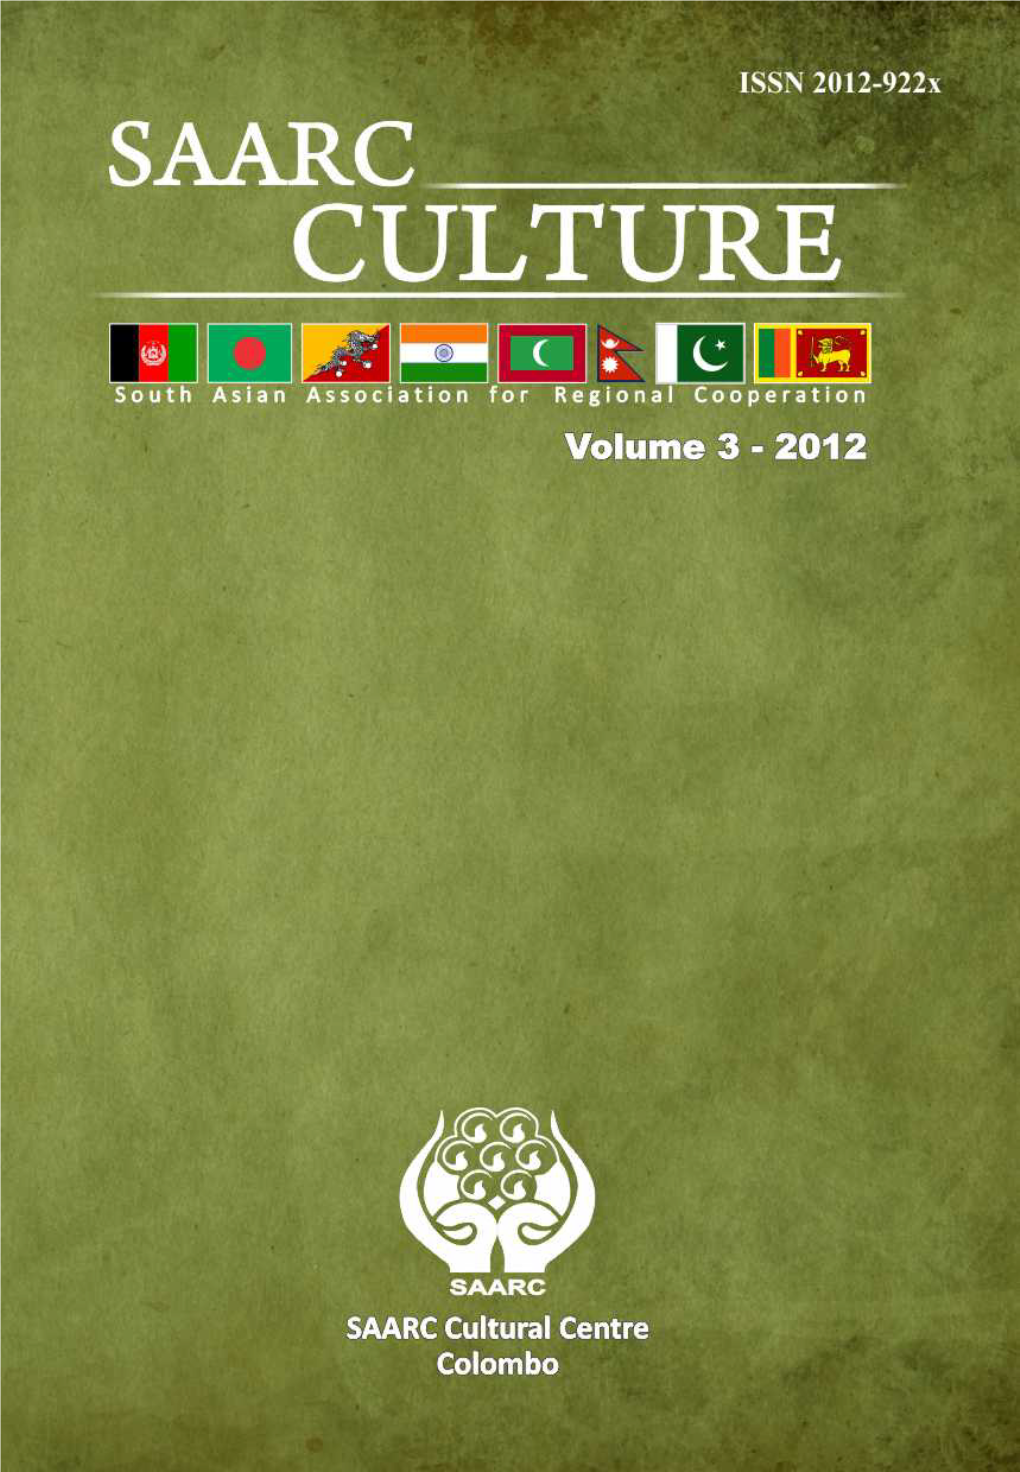 SAARC Culture Volume 3, 2012